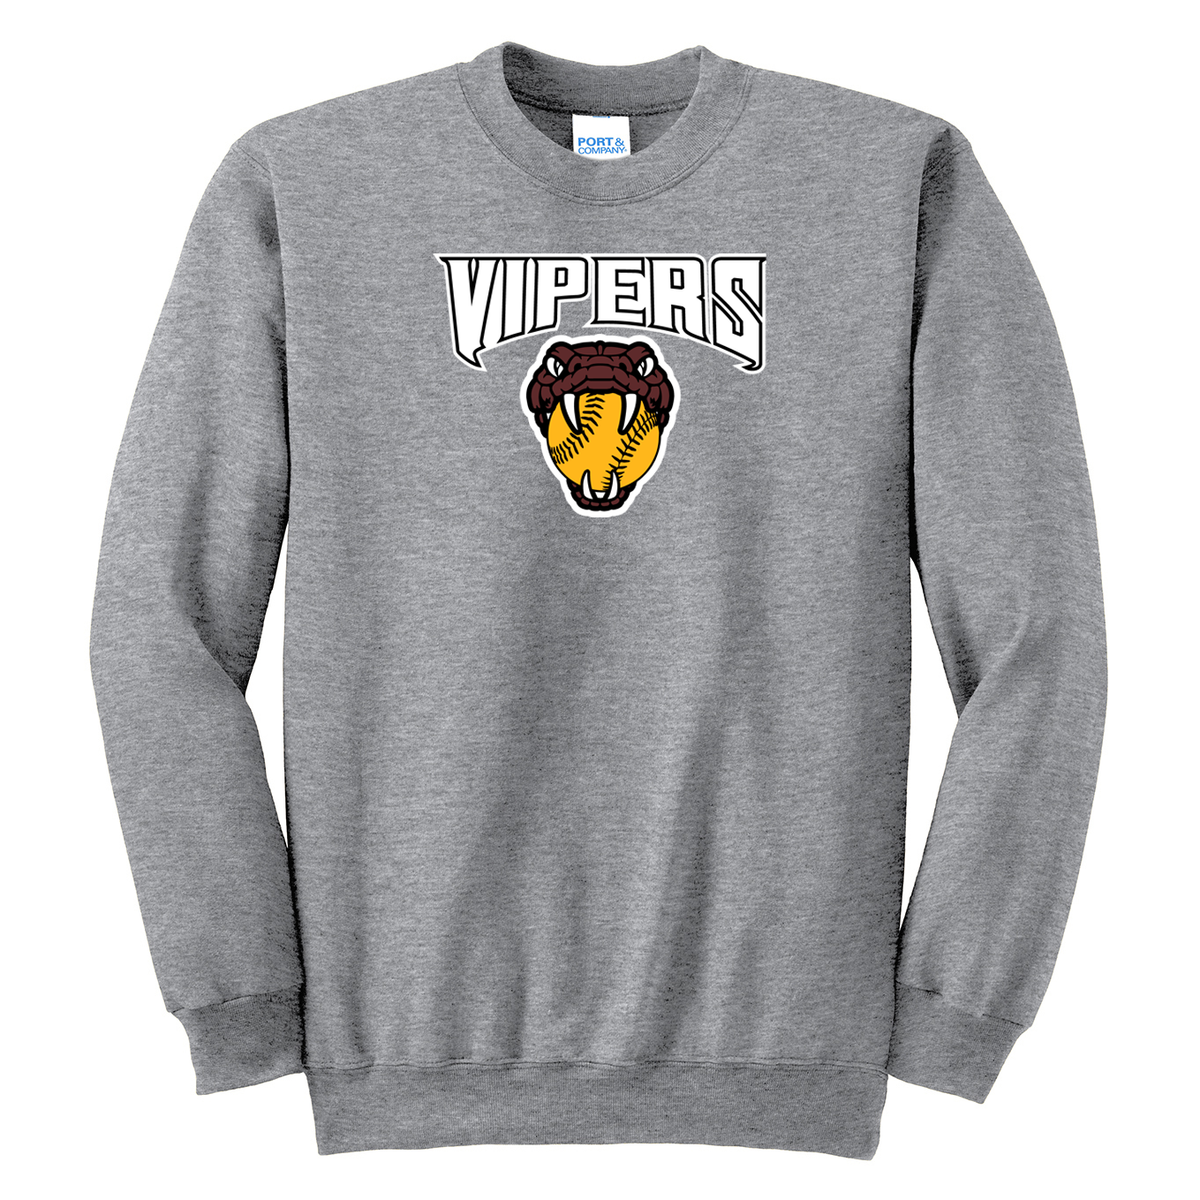 Vipers Softball  Crew Neck Sweater